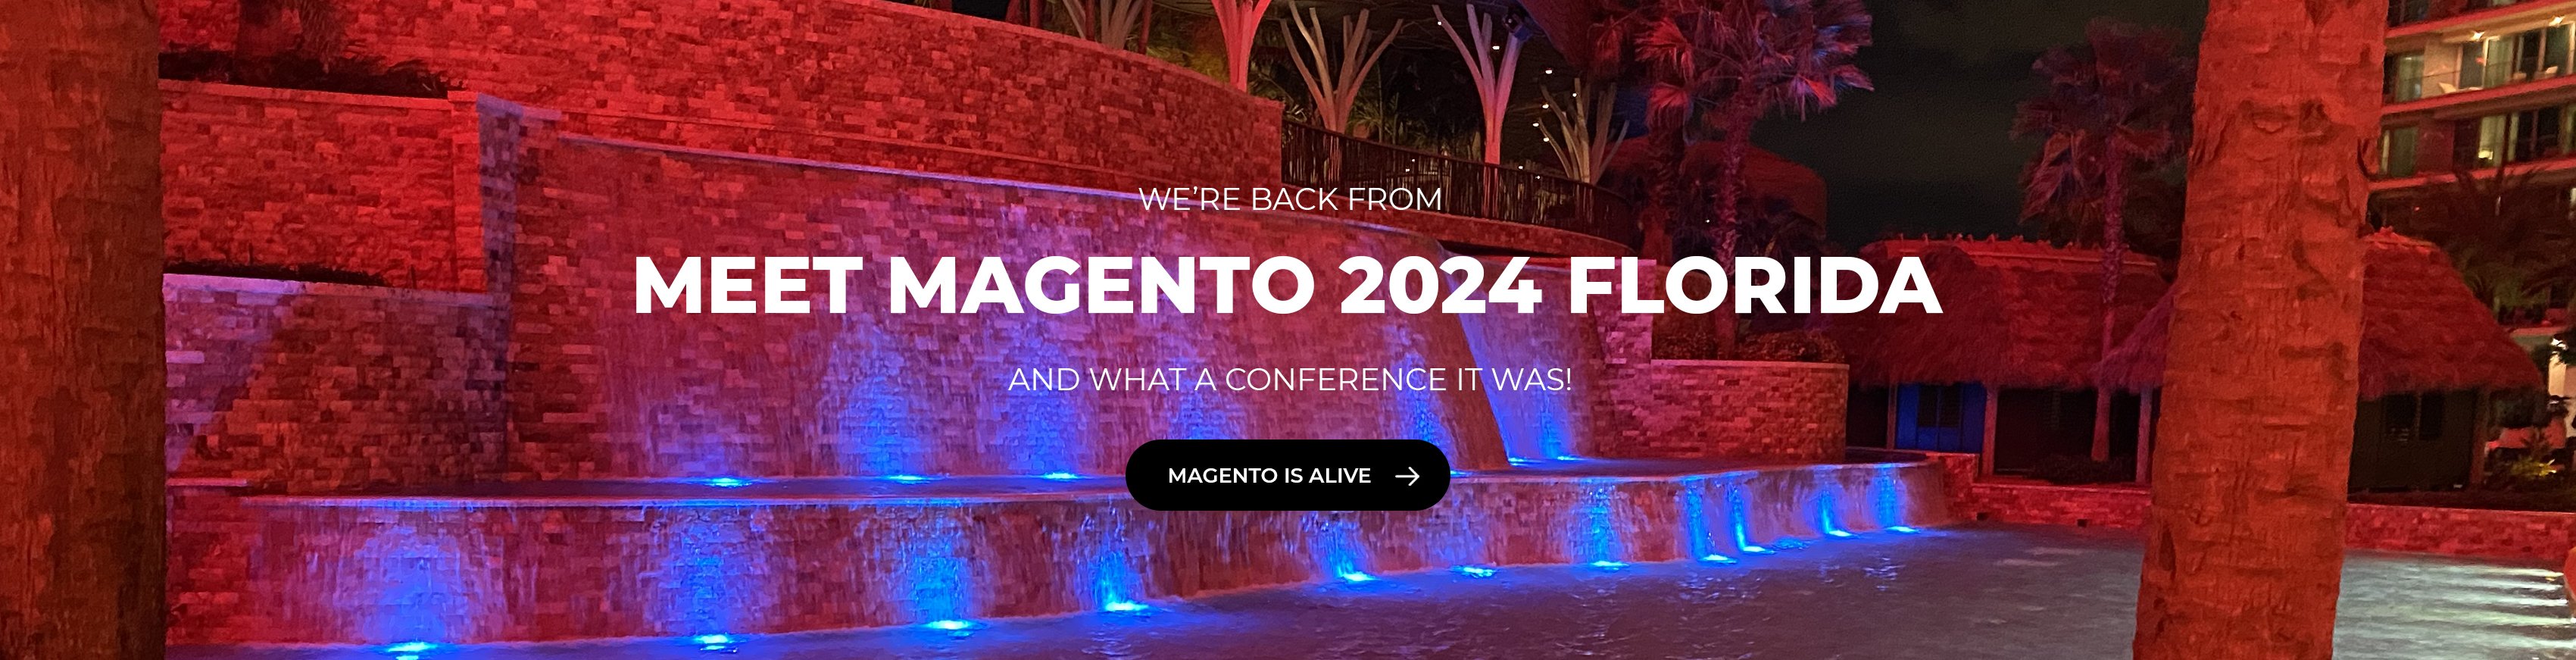 Meet Magento 2024 Florida